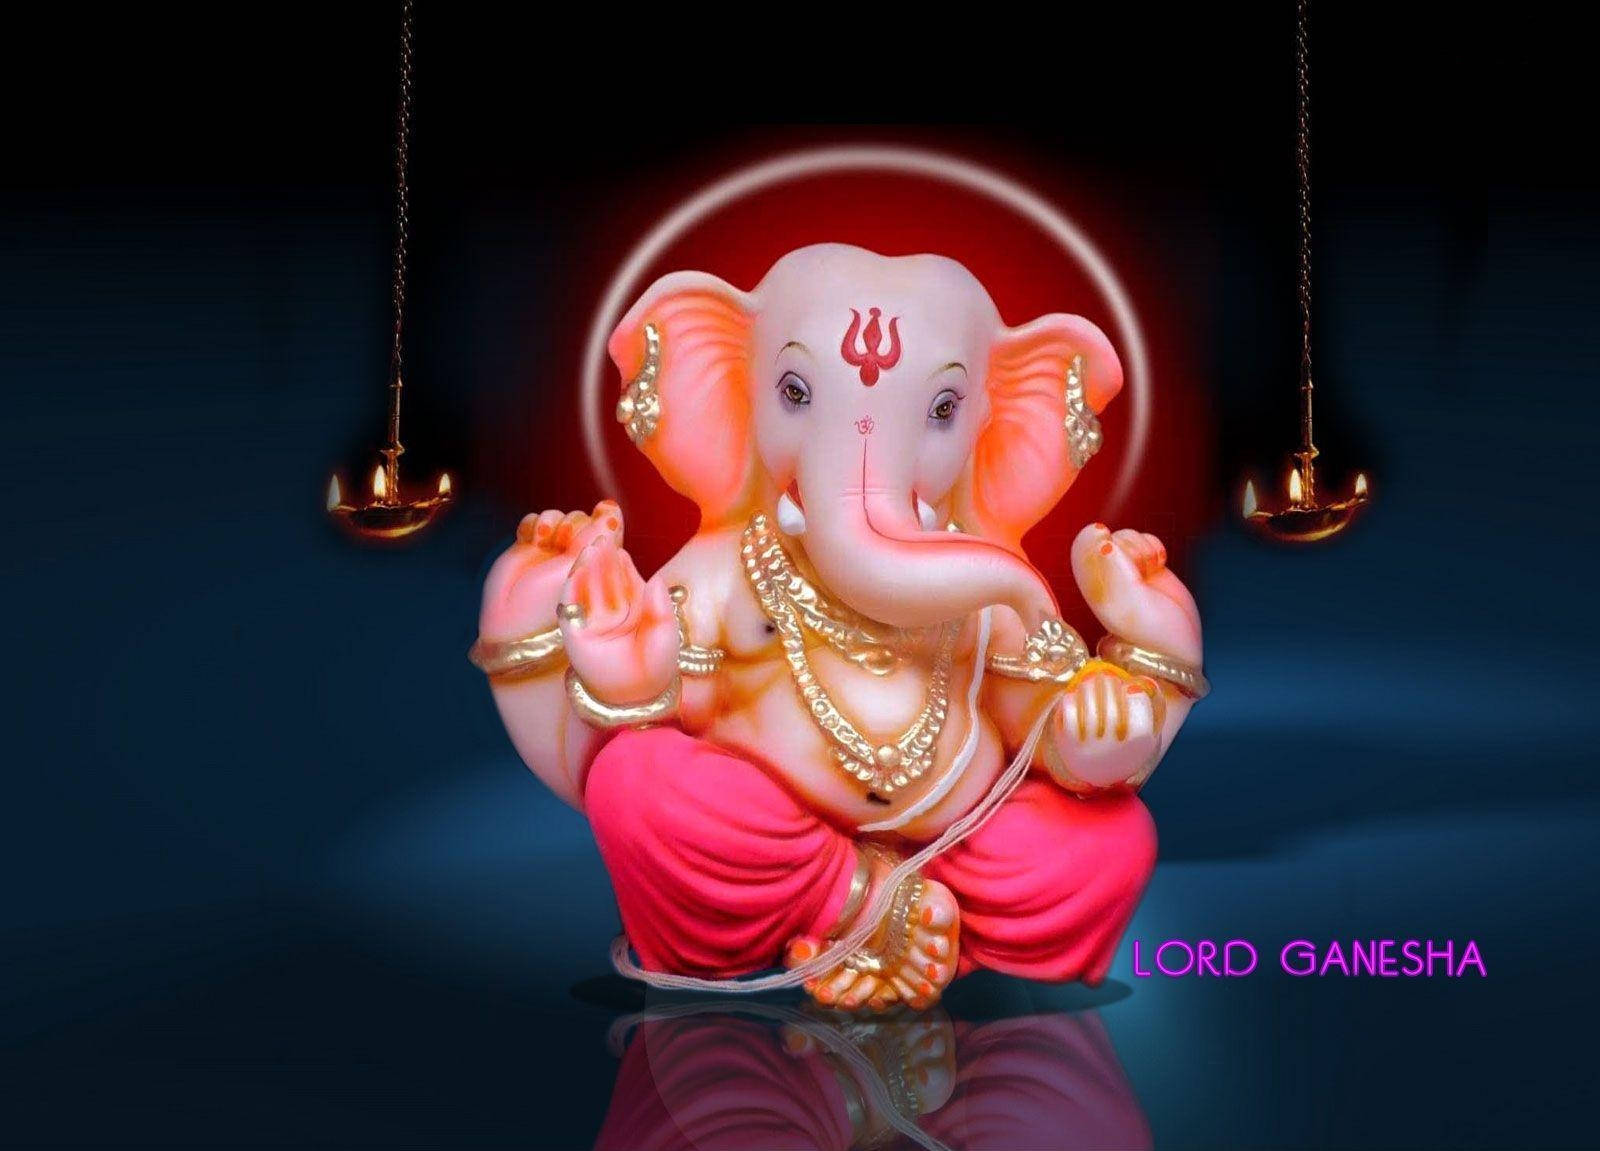 Free Ganesha Wallpaper Downloads, [400+] Ganesha Wallpapers for FREE |  